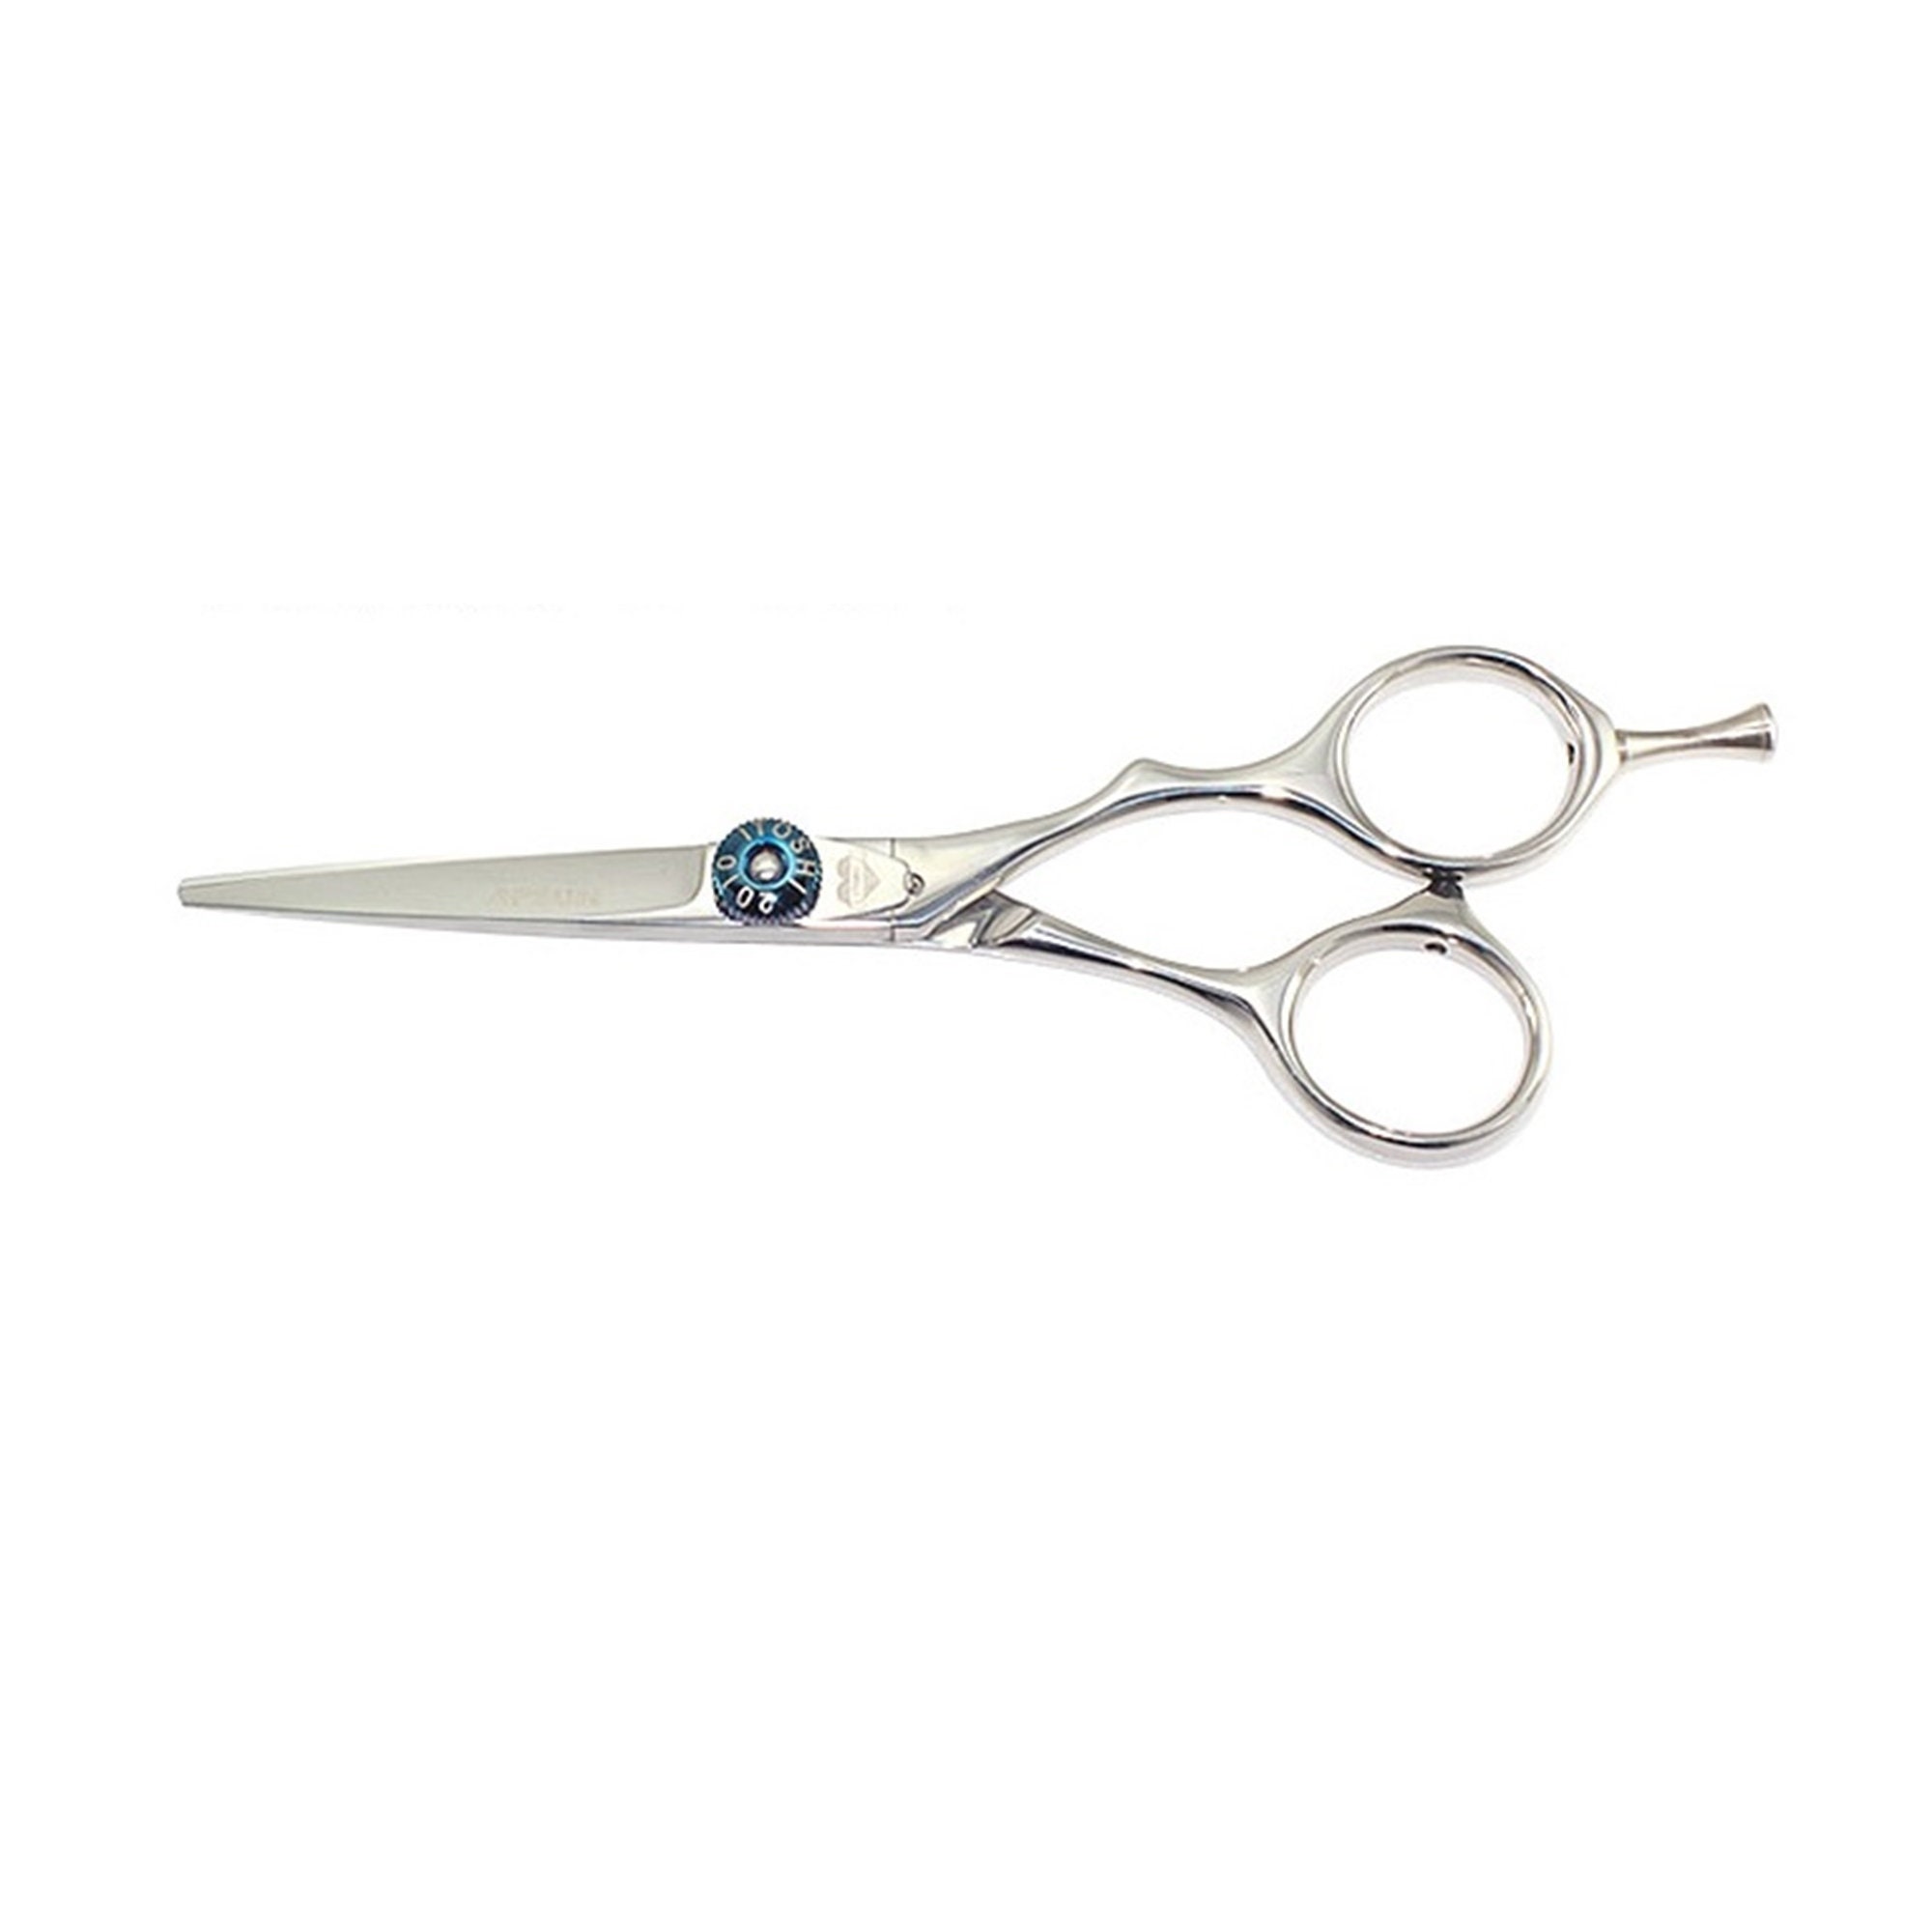 5.5 Tungsten Titan Cobalt Hair Cutting Scissors Best for Dry Cut